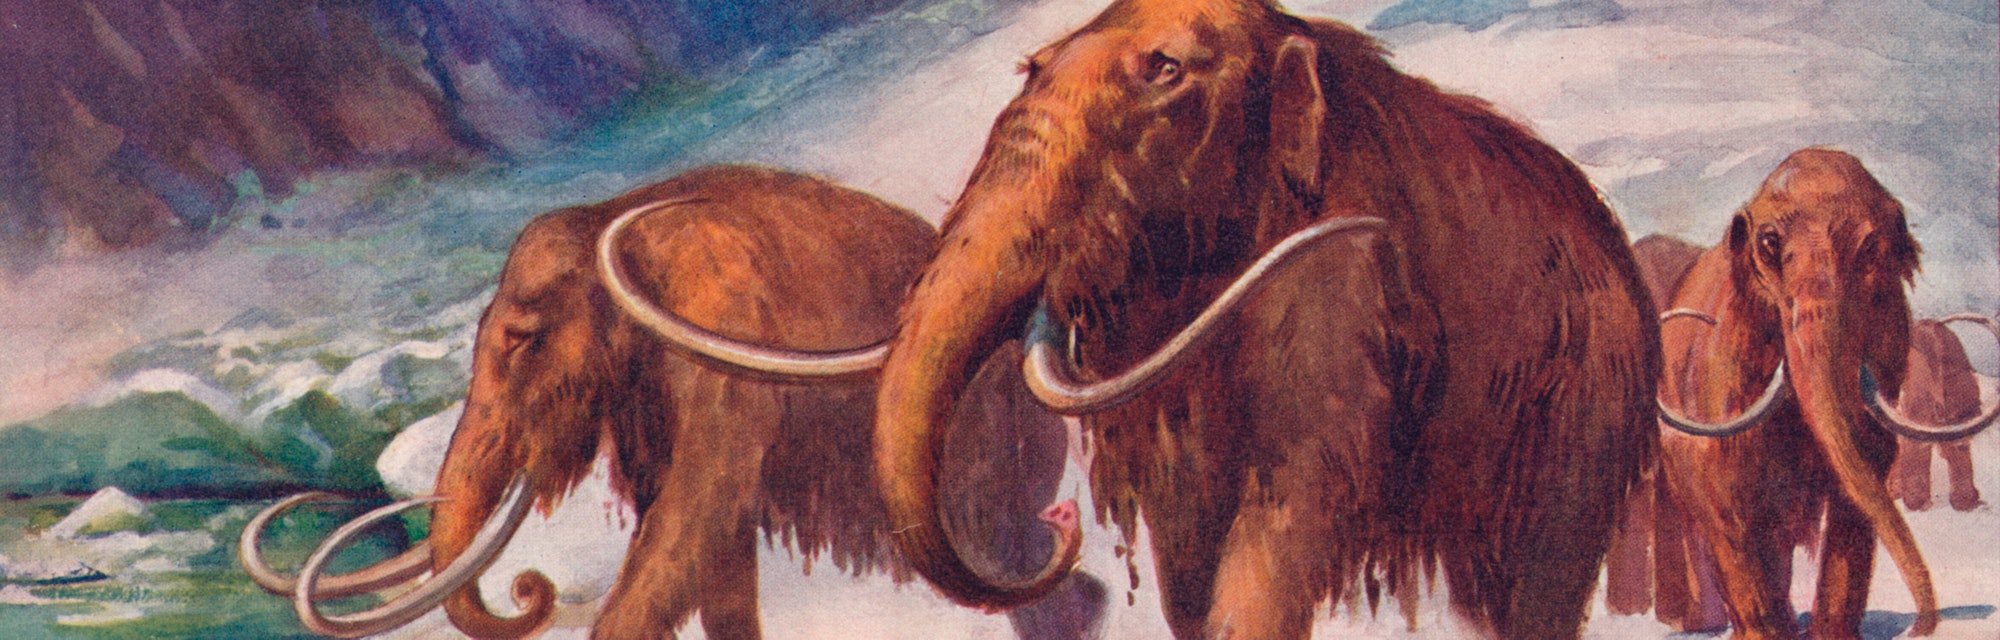 Ice Age, mammoth